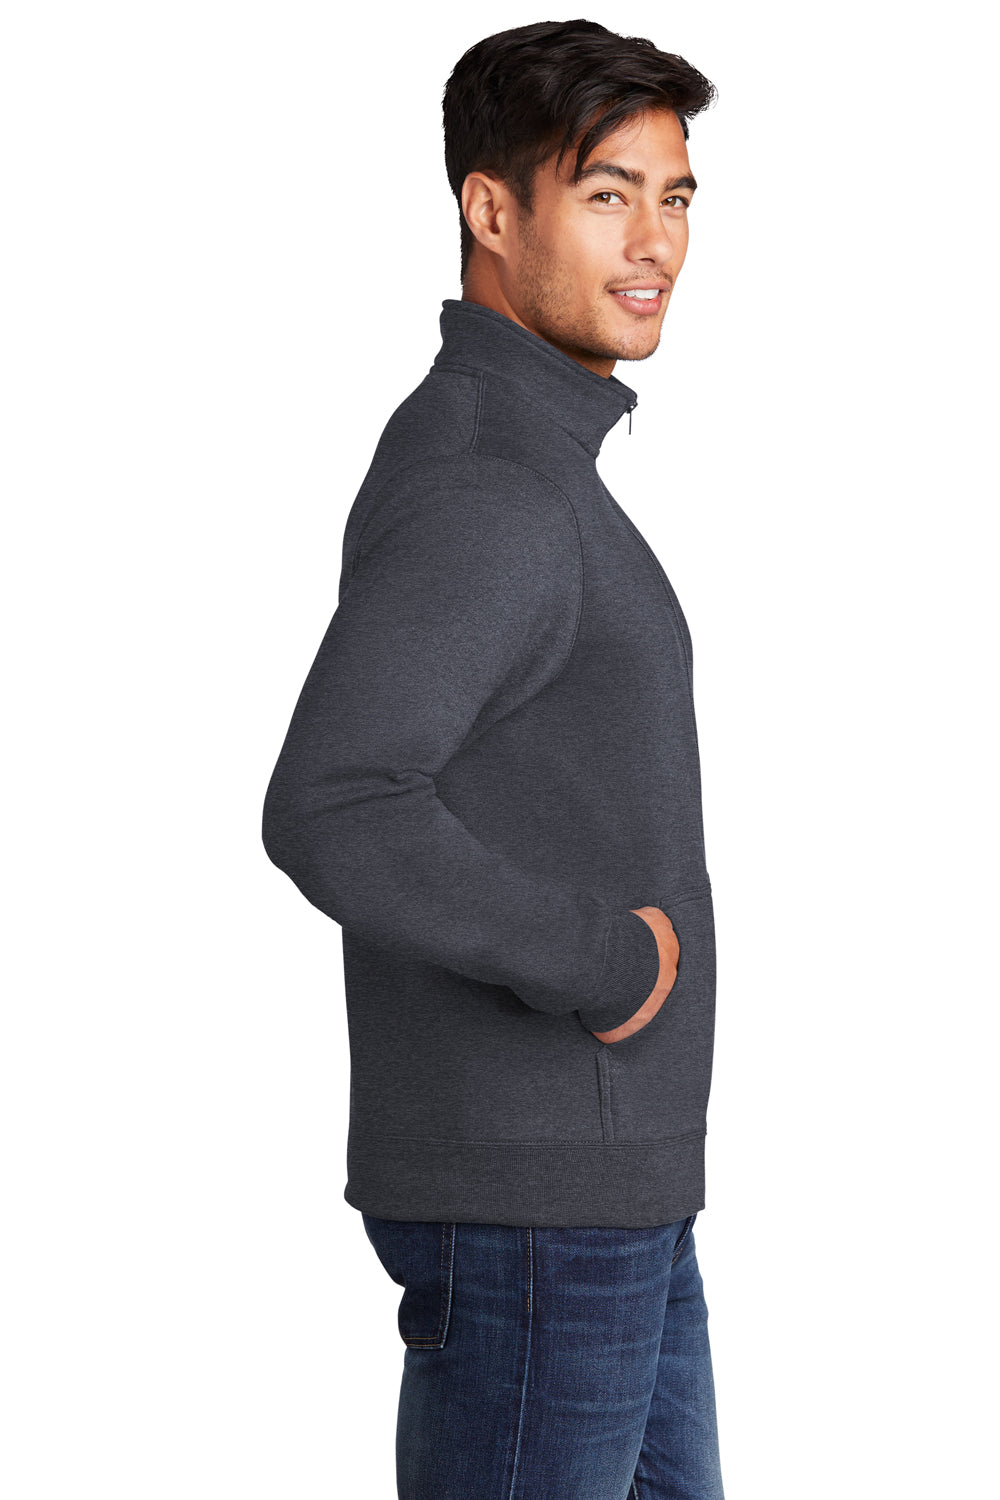 Port & Company Mens Core Fleece Full Zip Sweatshirt Heather Navy Blue Side